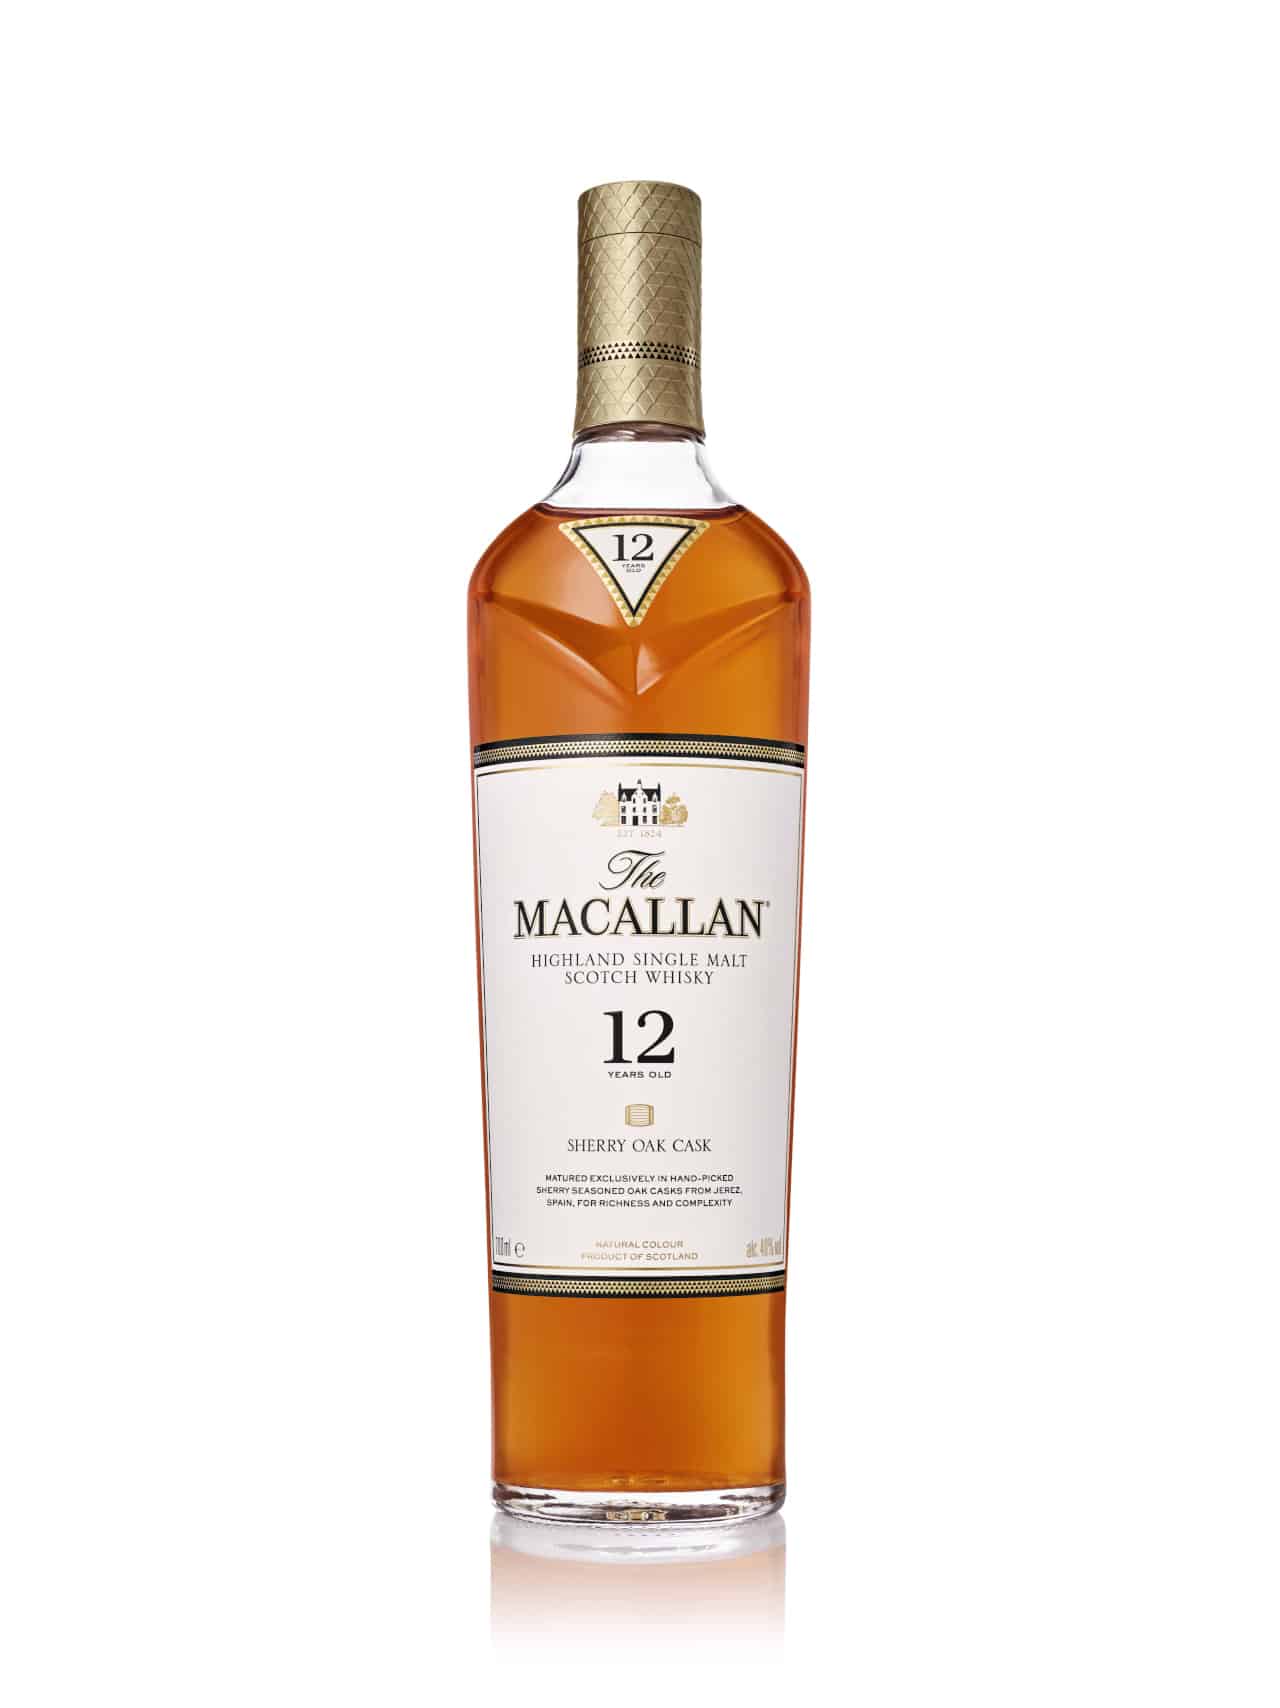 Bottle shot of new Macallan Sherry Oak whisky